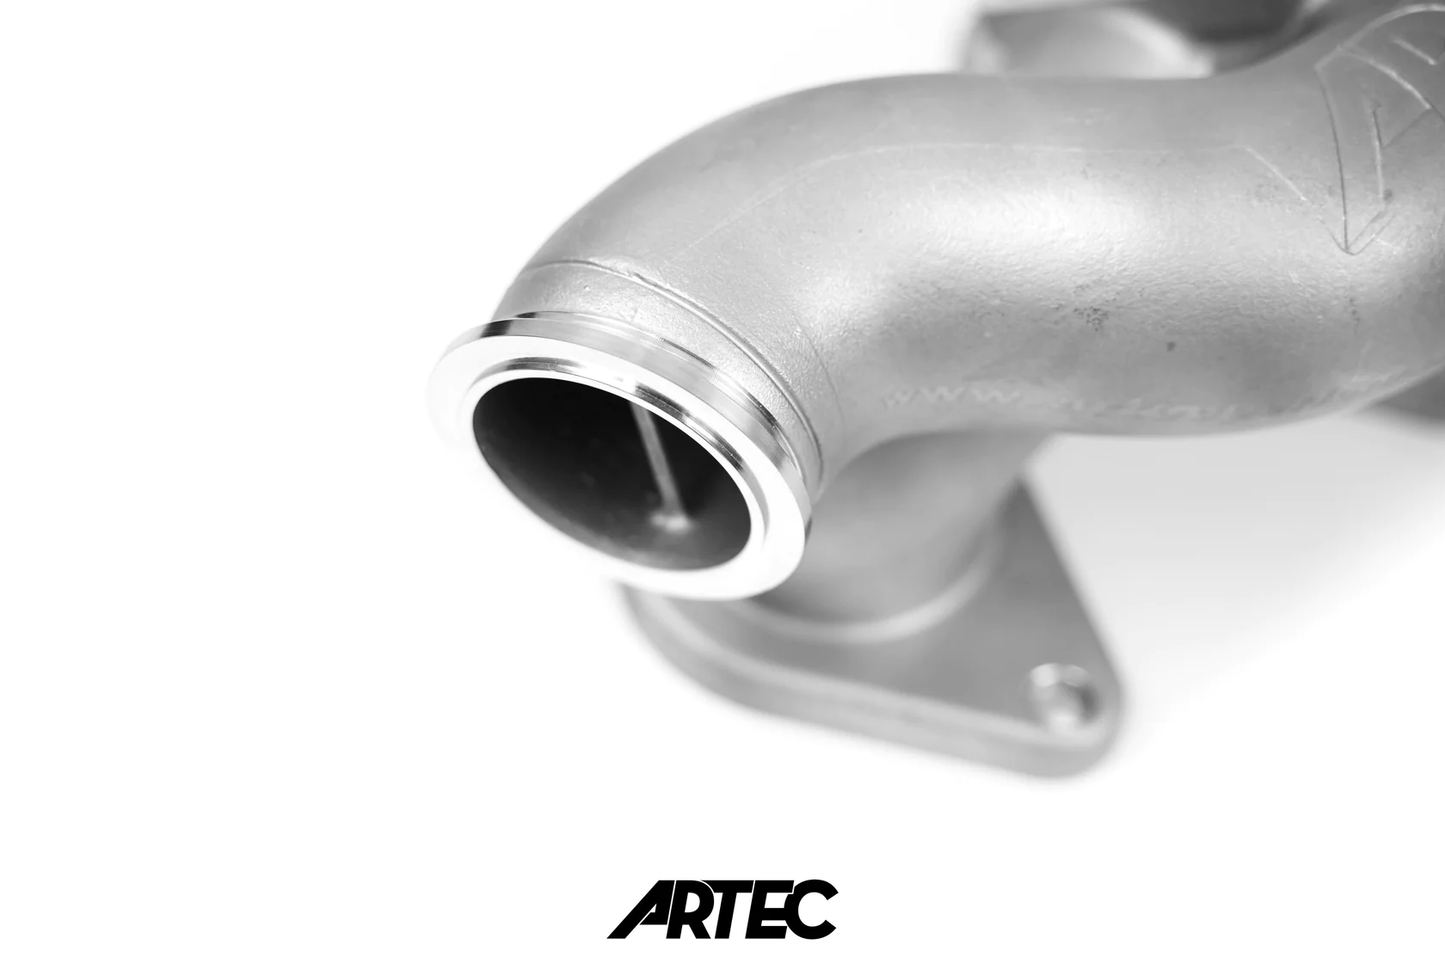 ARTEC - Mazda 13B T4 Exhaust Manifold